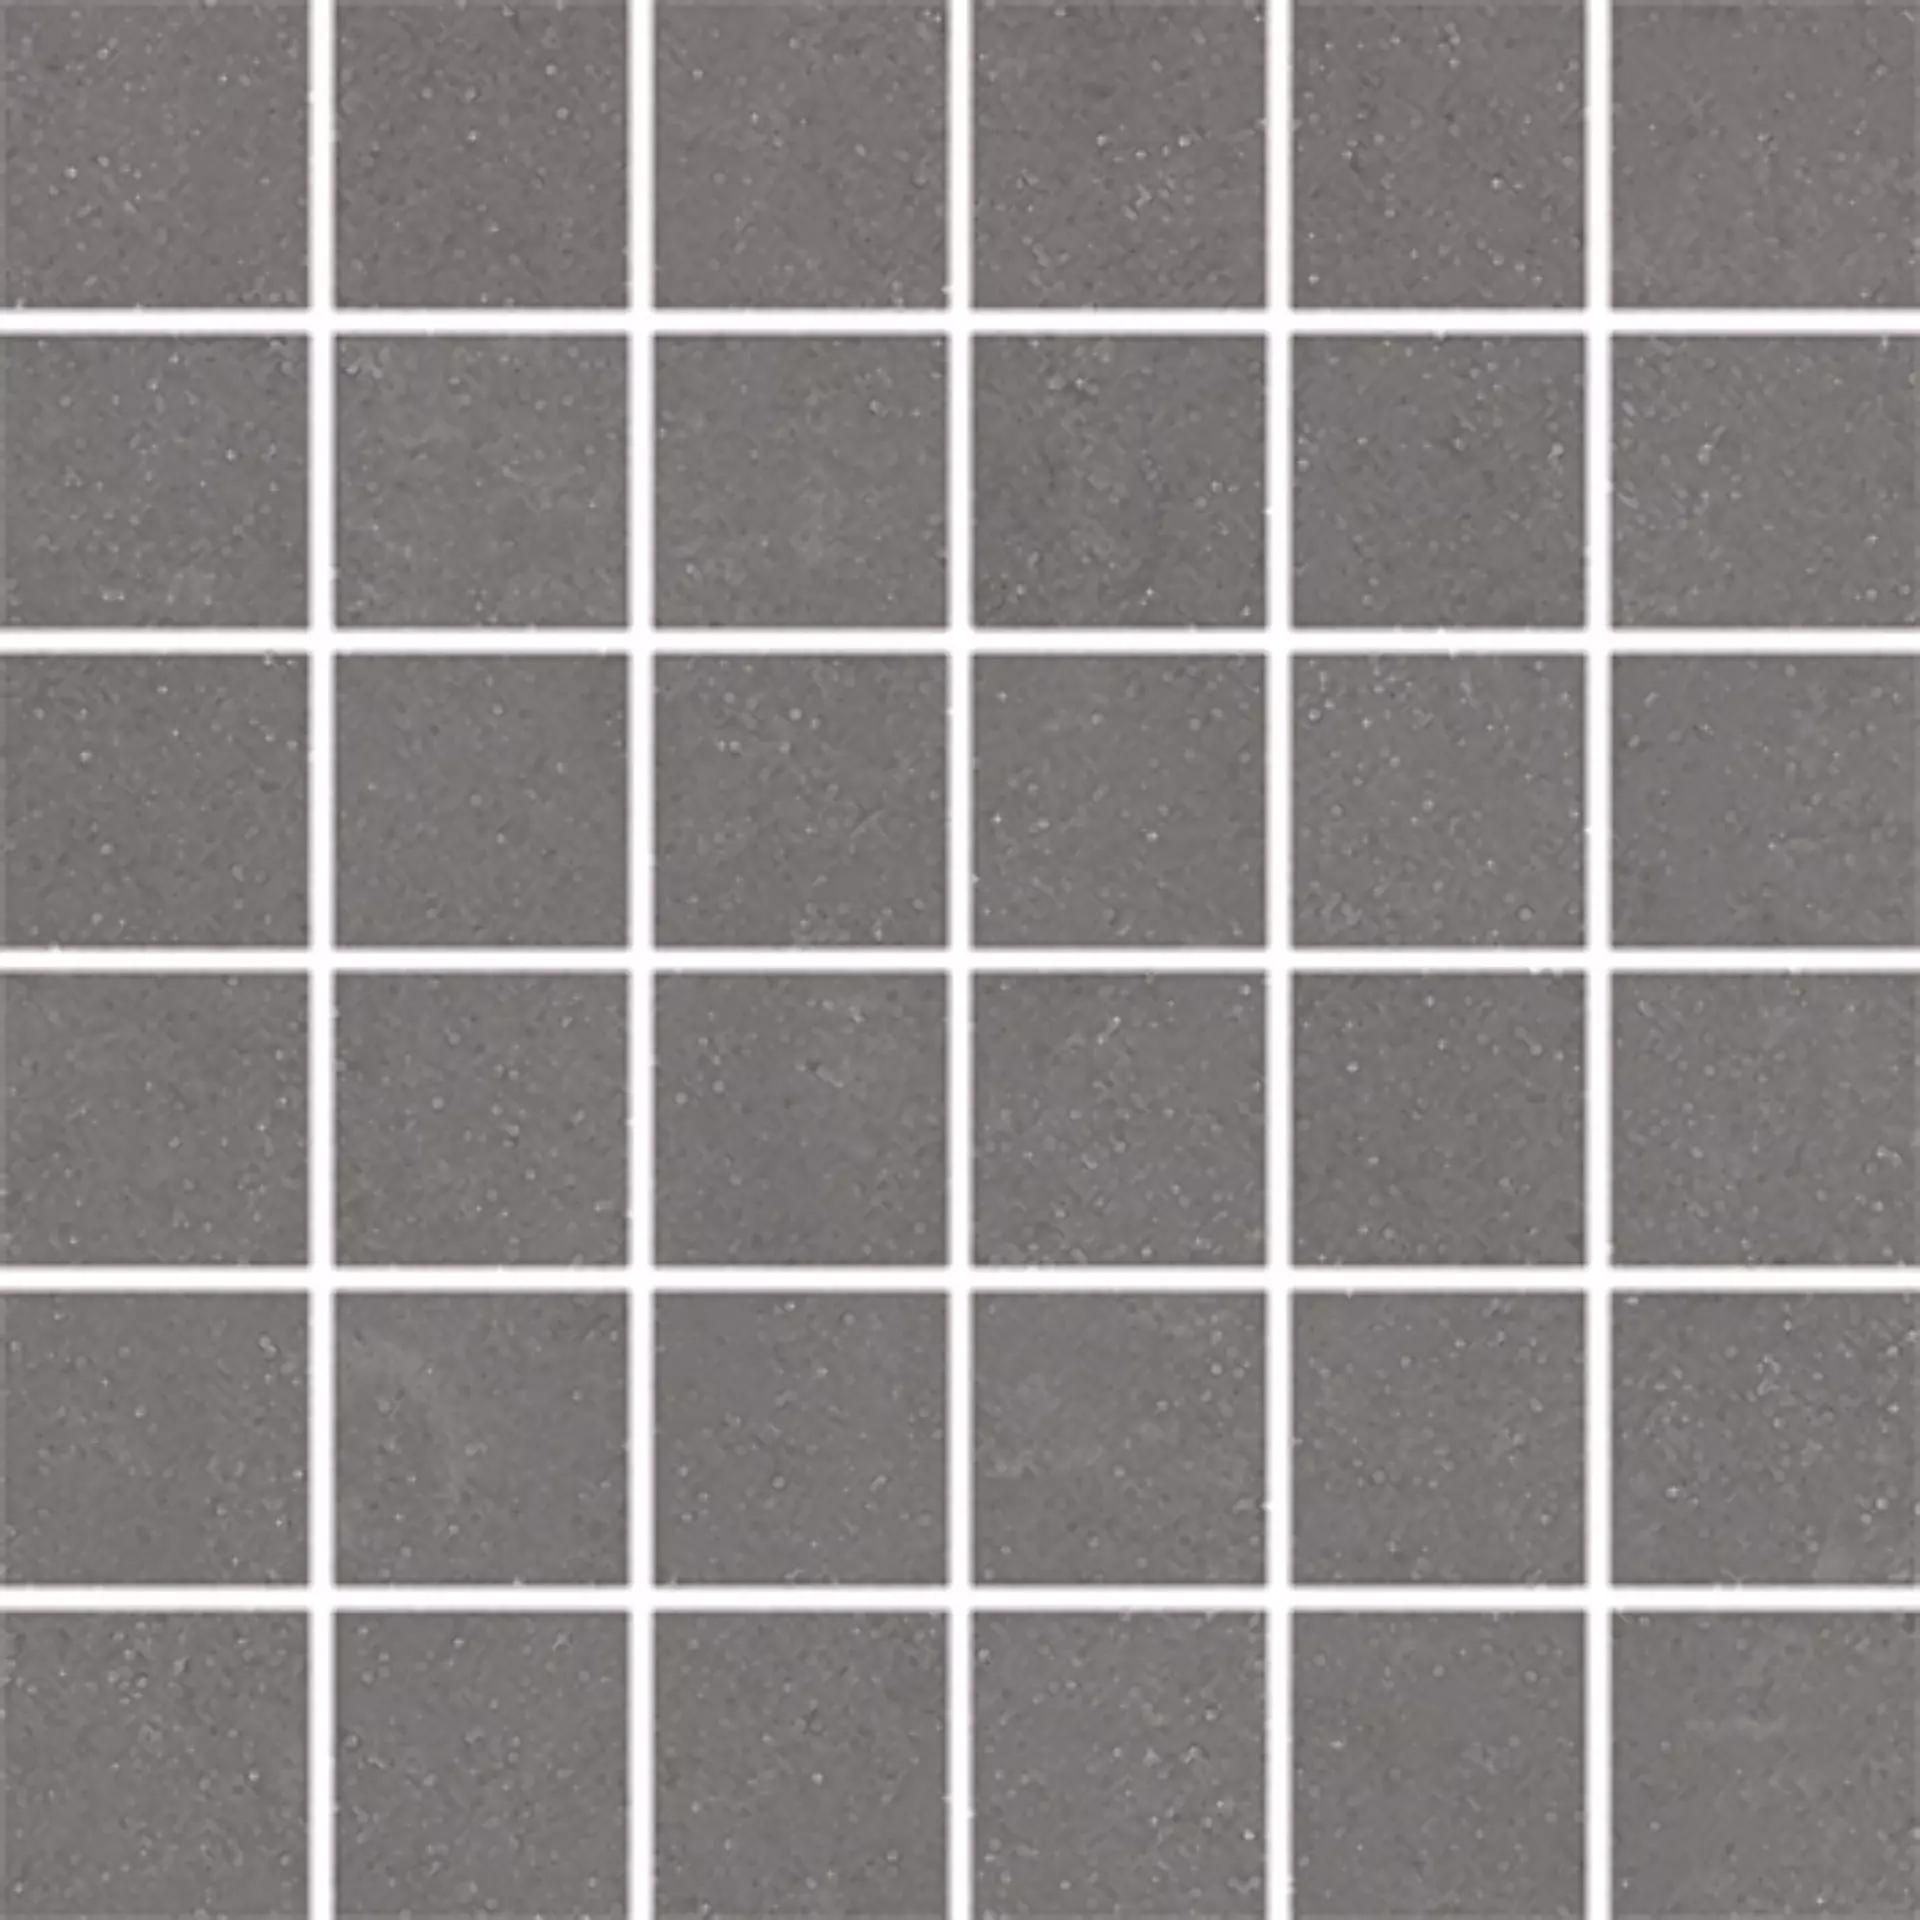 Villeroy & Boch Lobby Dark Grey Matt Mosaic (5x5) 2706-LO61 30x30cm 6mm